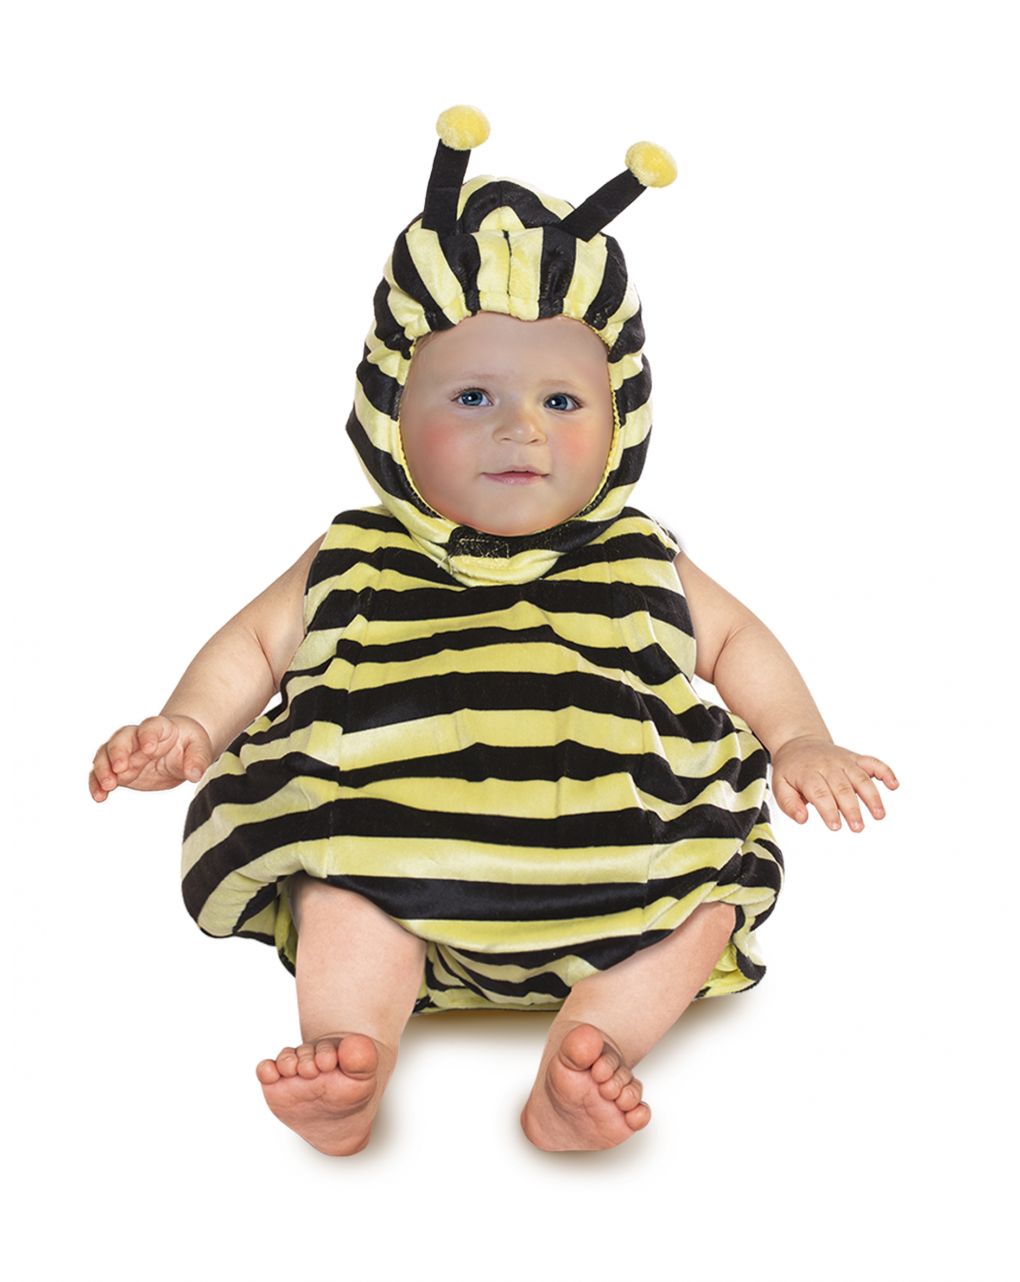 Disfraz abeja bebé 1 año - carnaval queen - Carnaval Queen